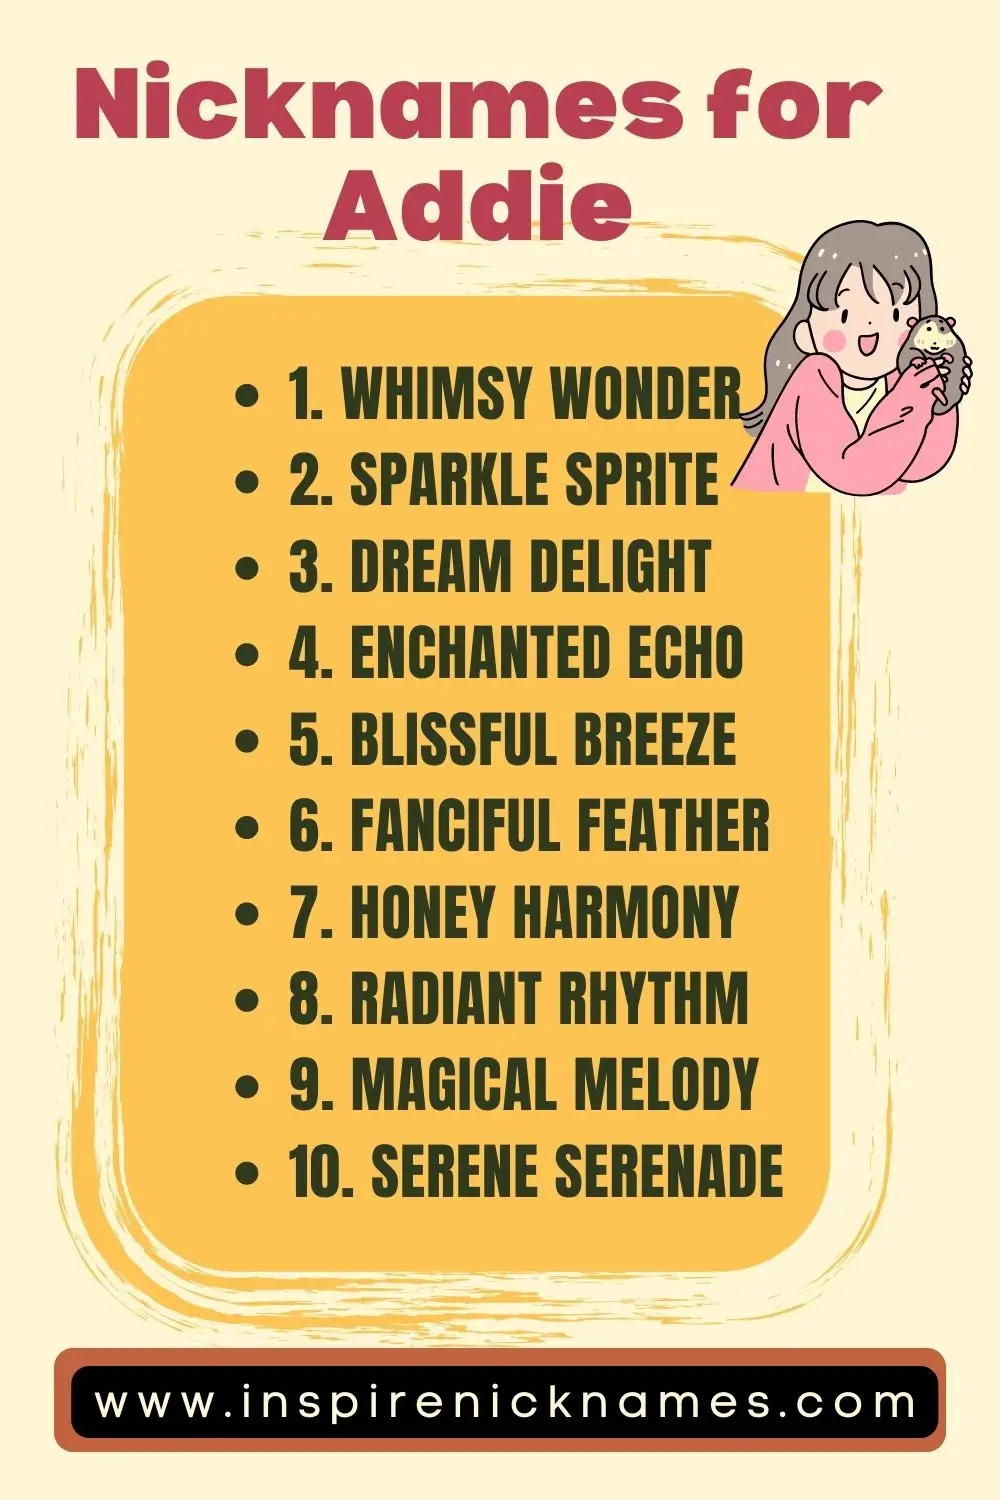 nicknames for Addie list ideas